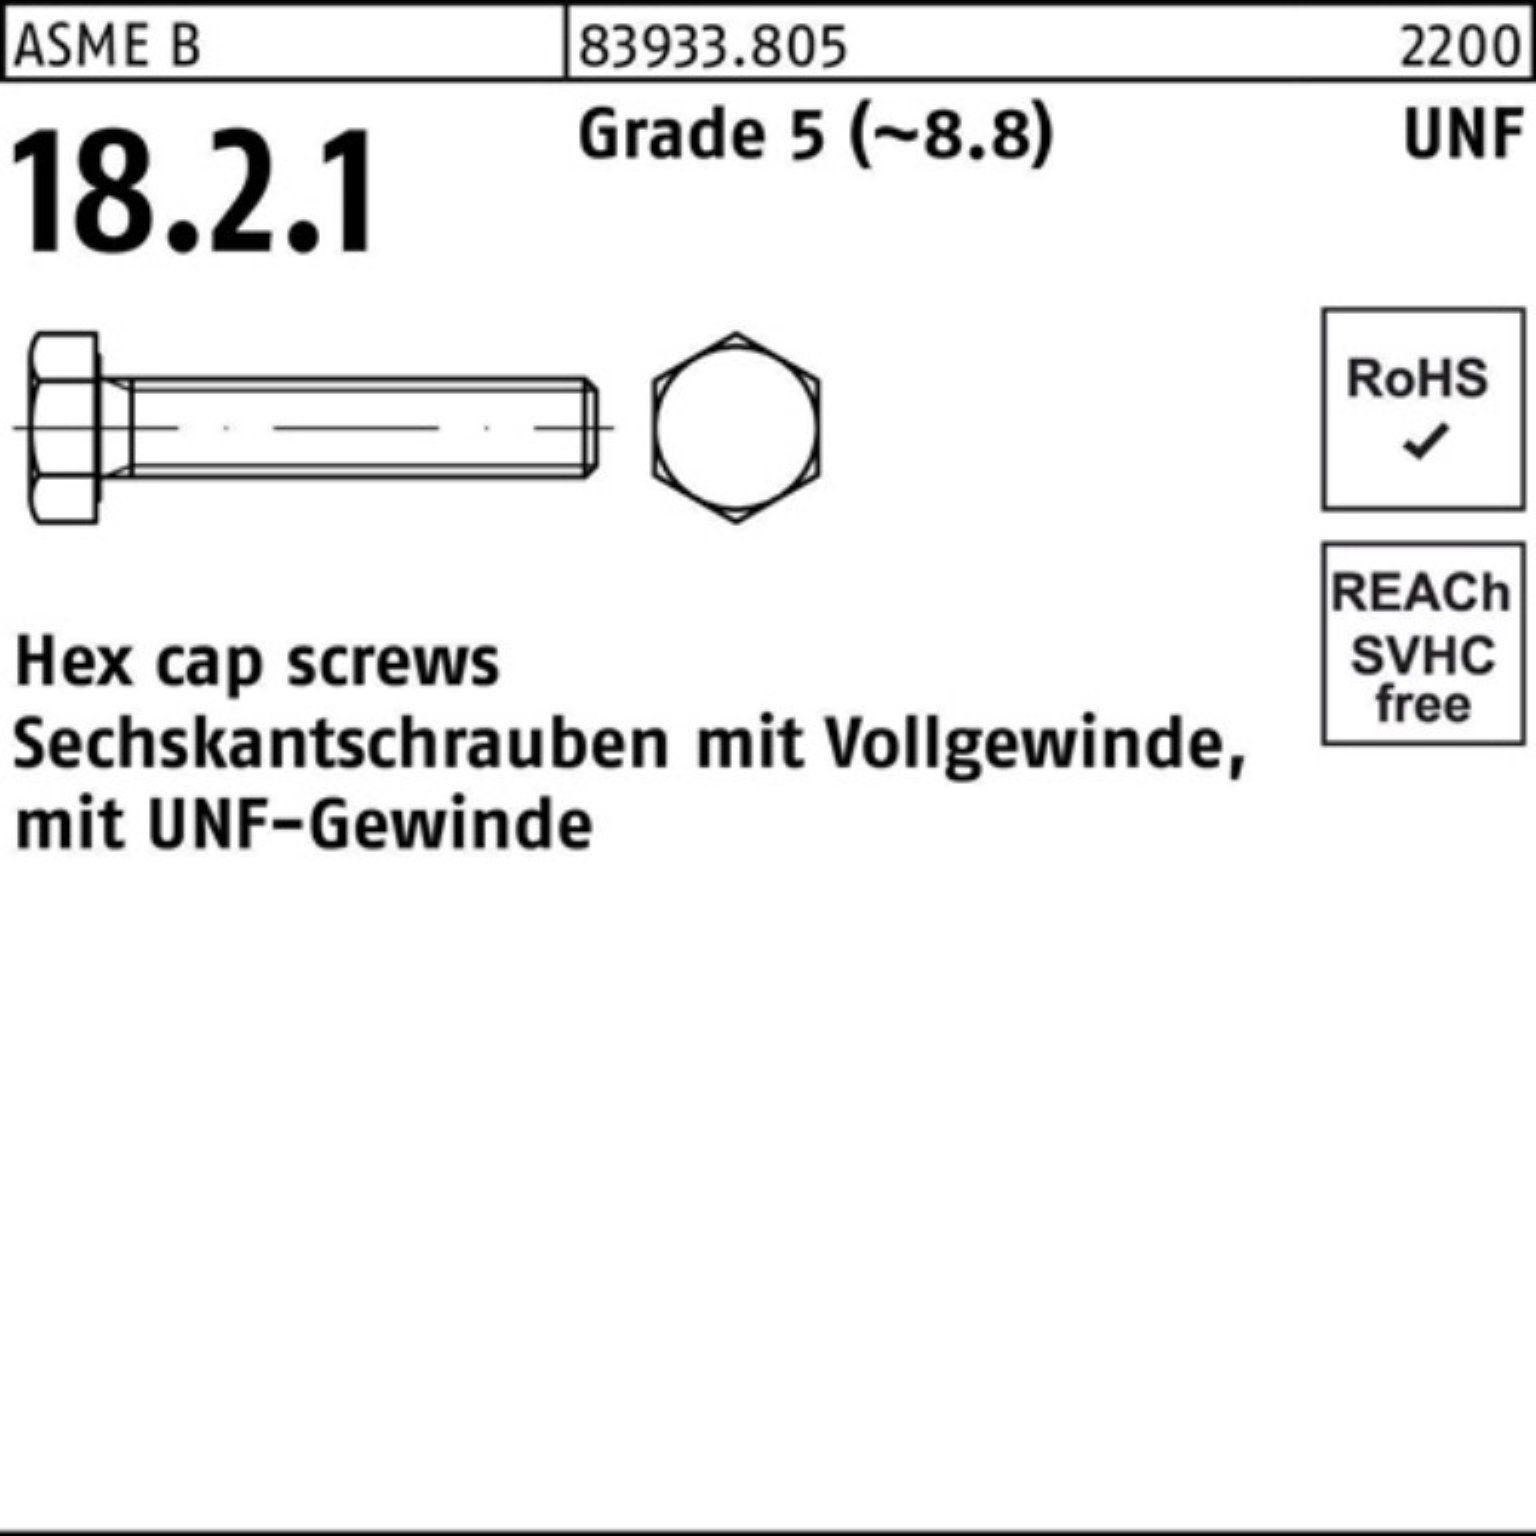 Reyher Sechskantschraube 100er Pack Sechskantschraube R 83933 UNF-Gewinde VG 5/16x 5/8 Grade 5